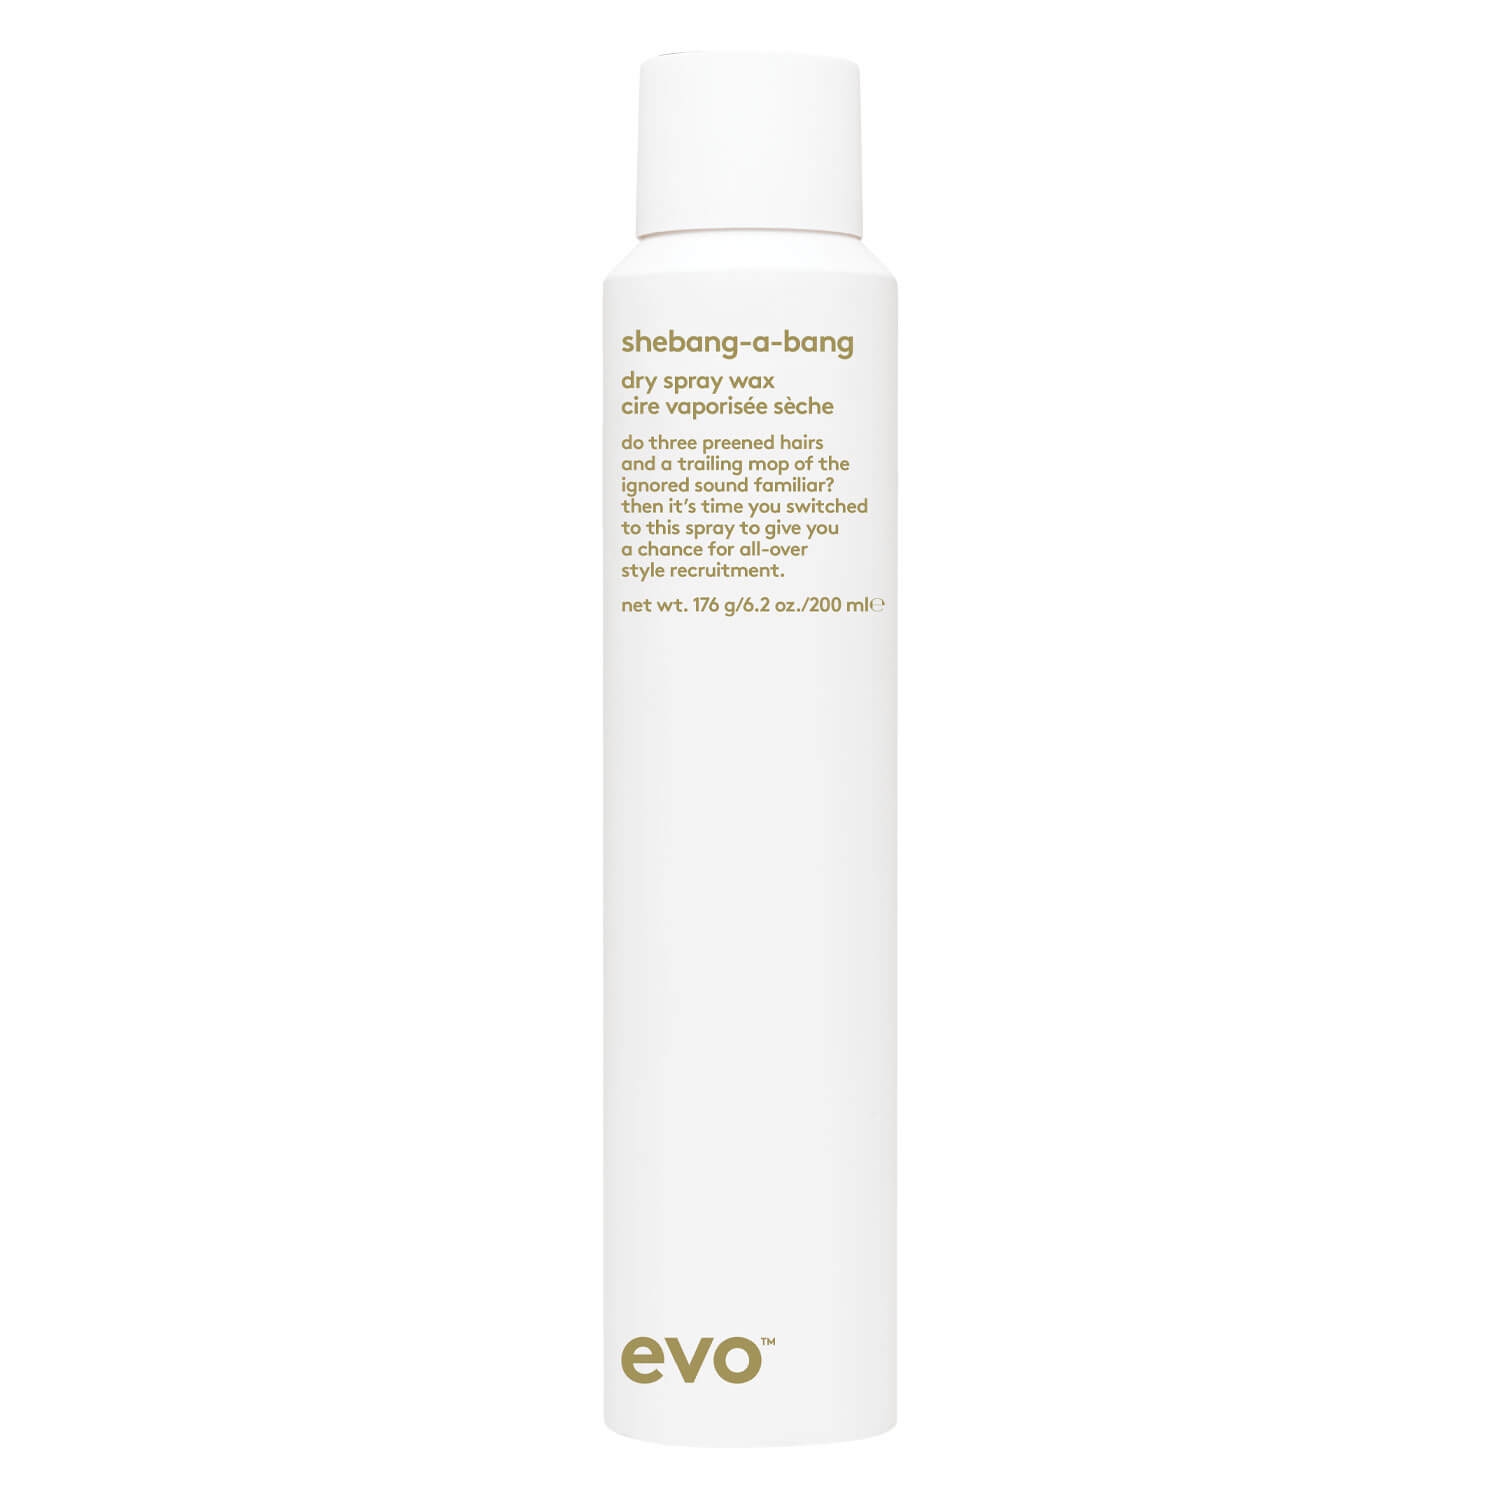 Product image from evo style - shebang-a-bang dry spray wax